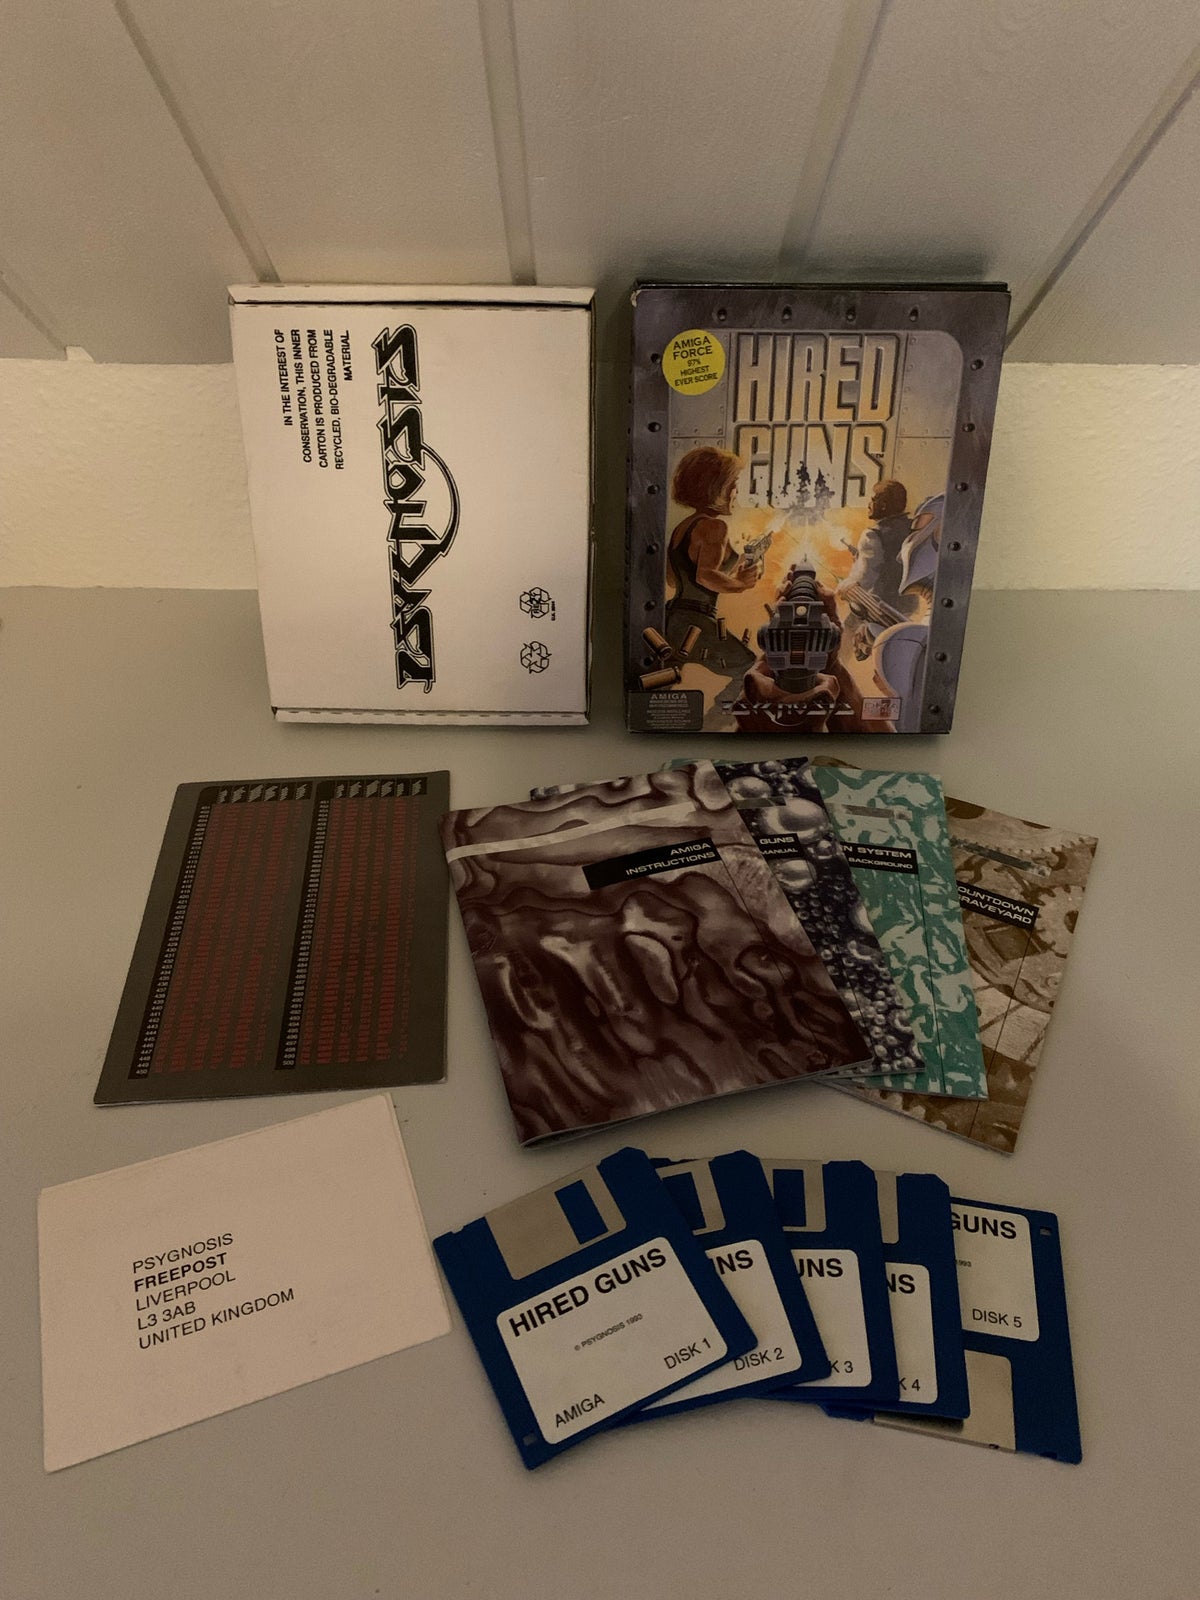 Hired Guns, Commodore Amiga 500